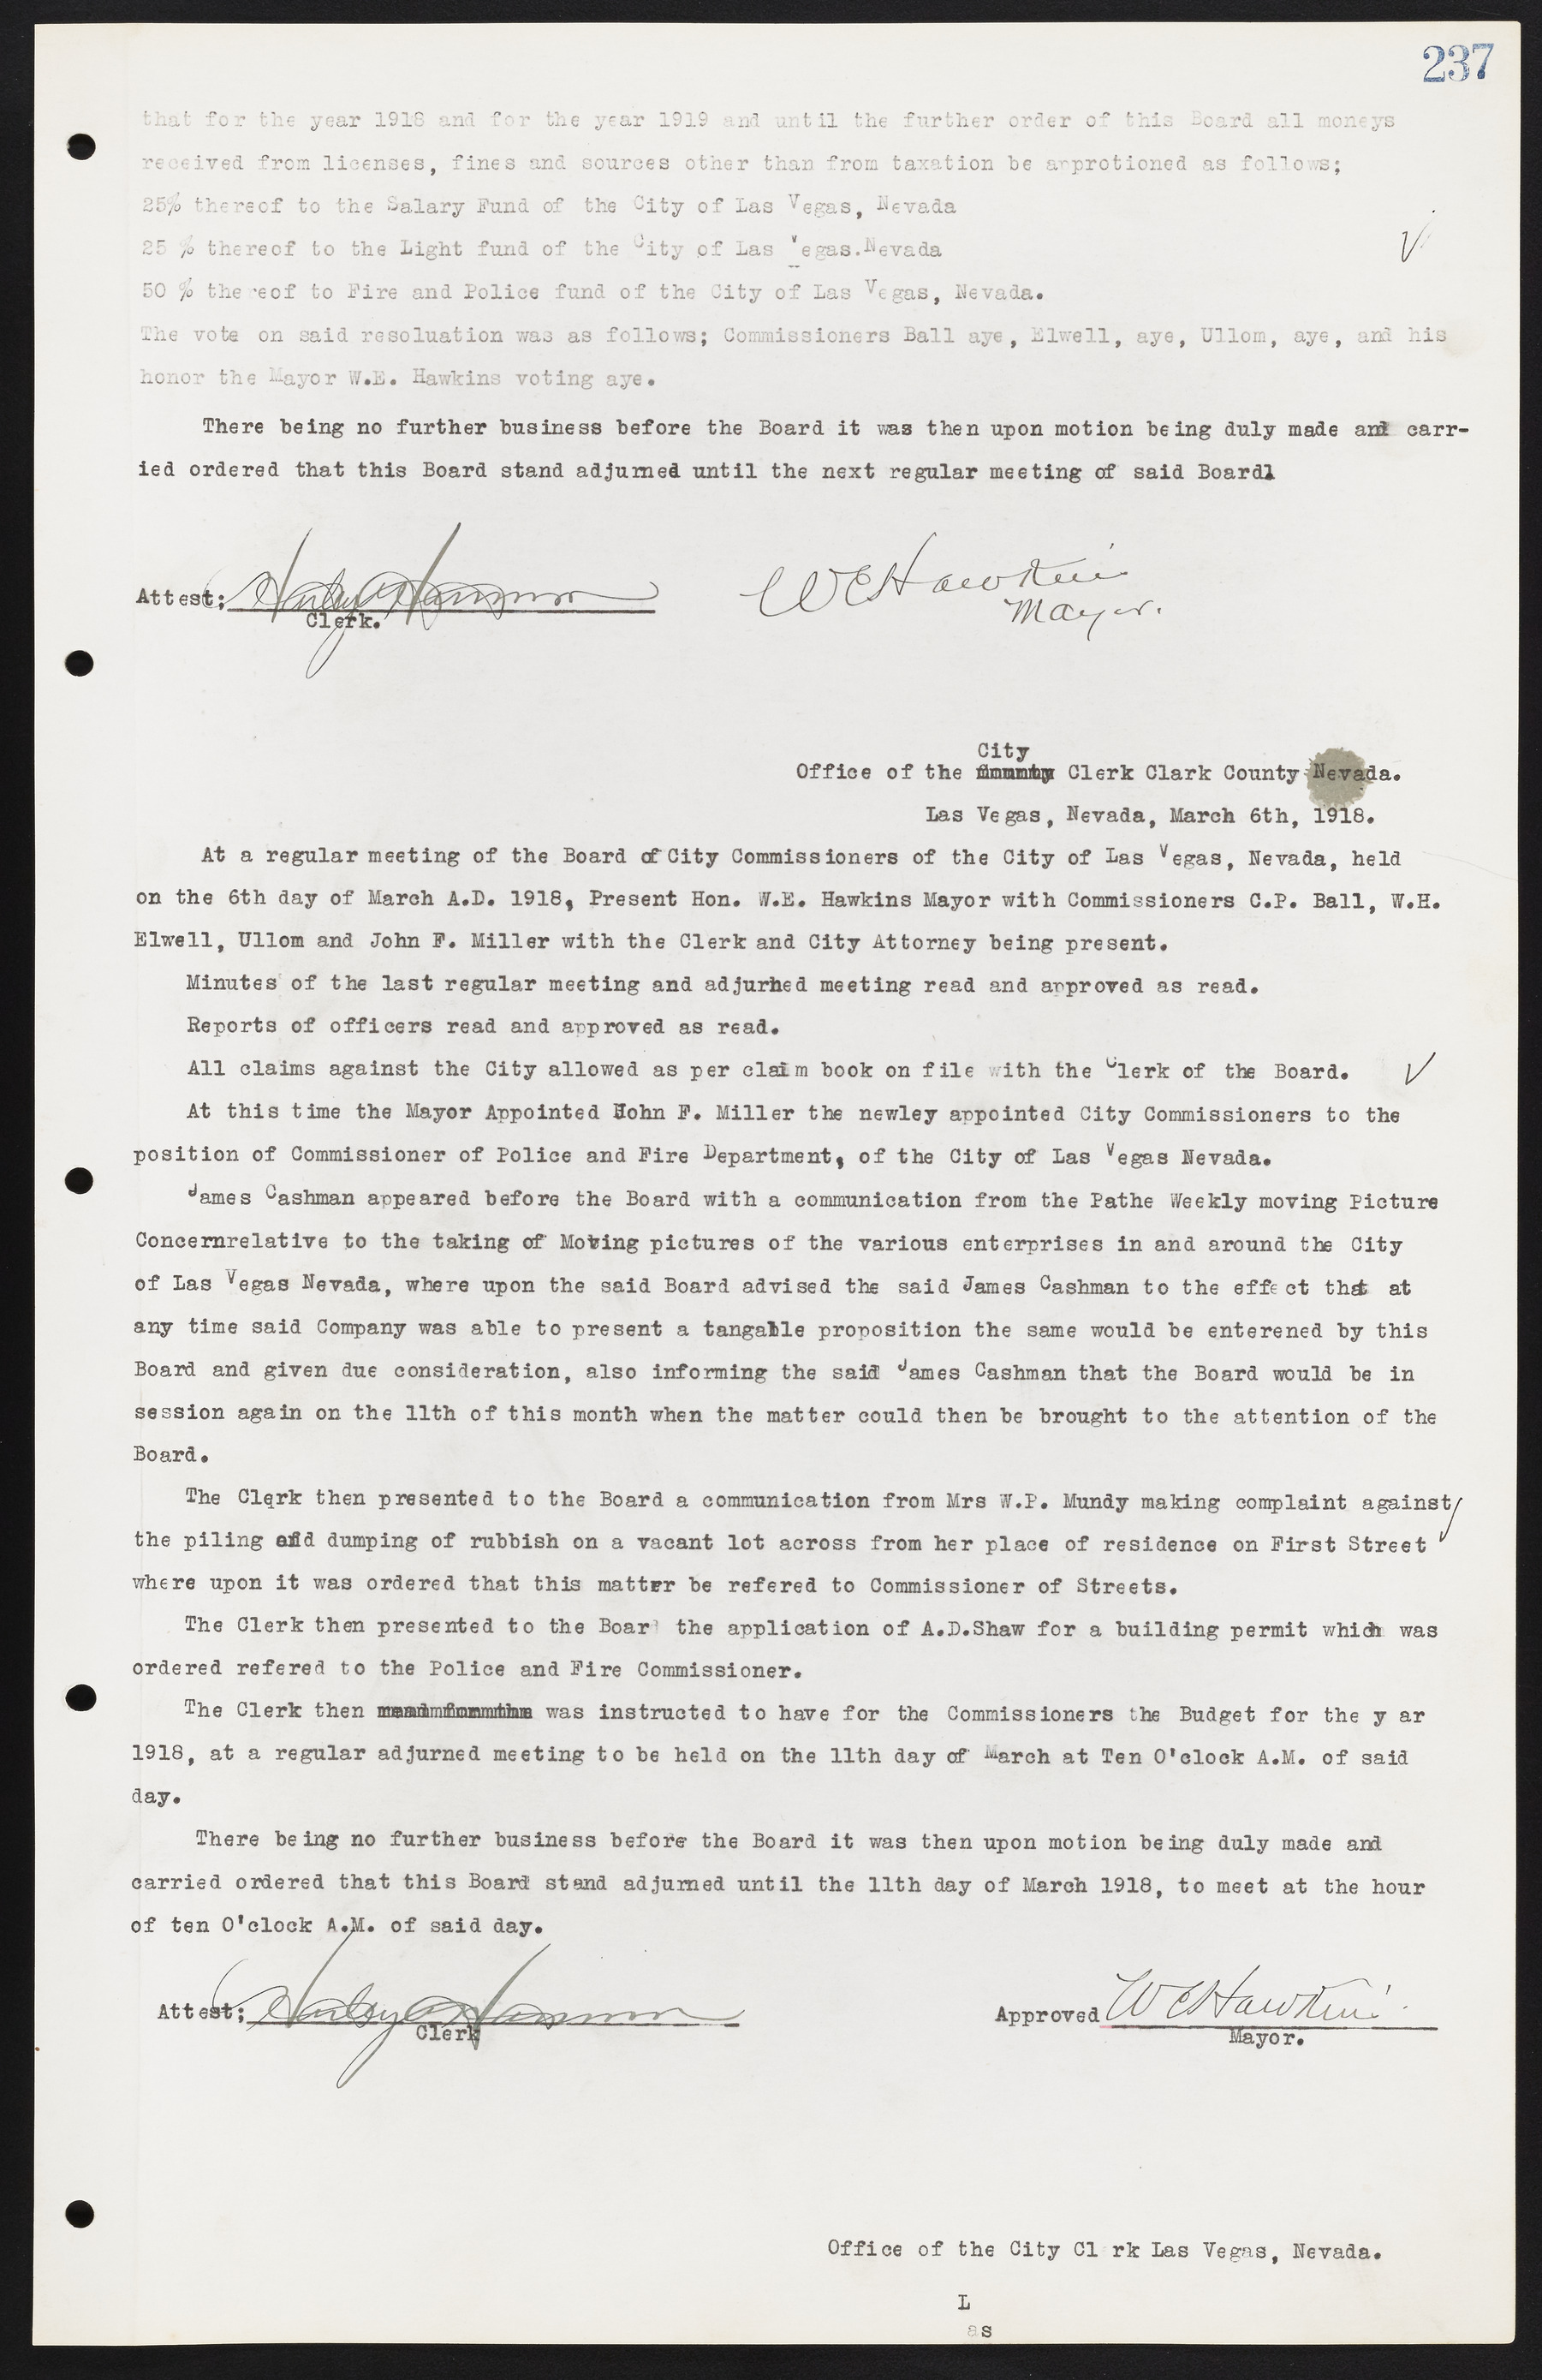 Las Vegas City Commission Minutes, June 22, 1911 to February 7, 1922, lvc000001-253